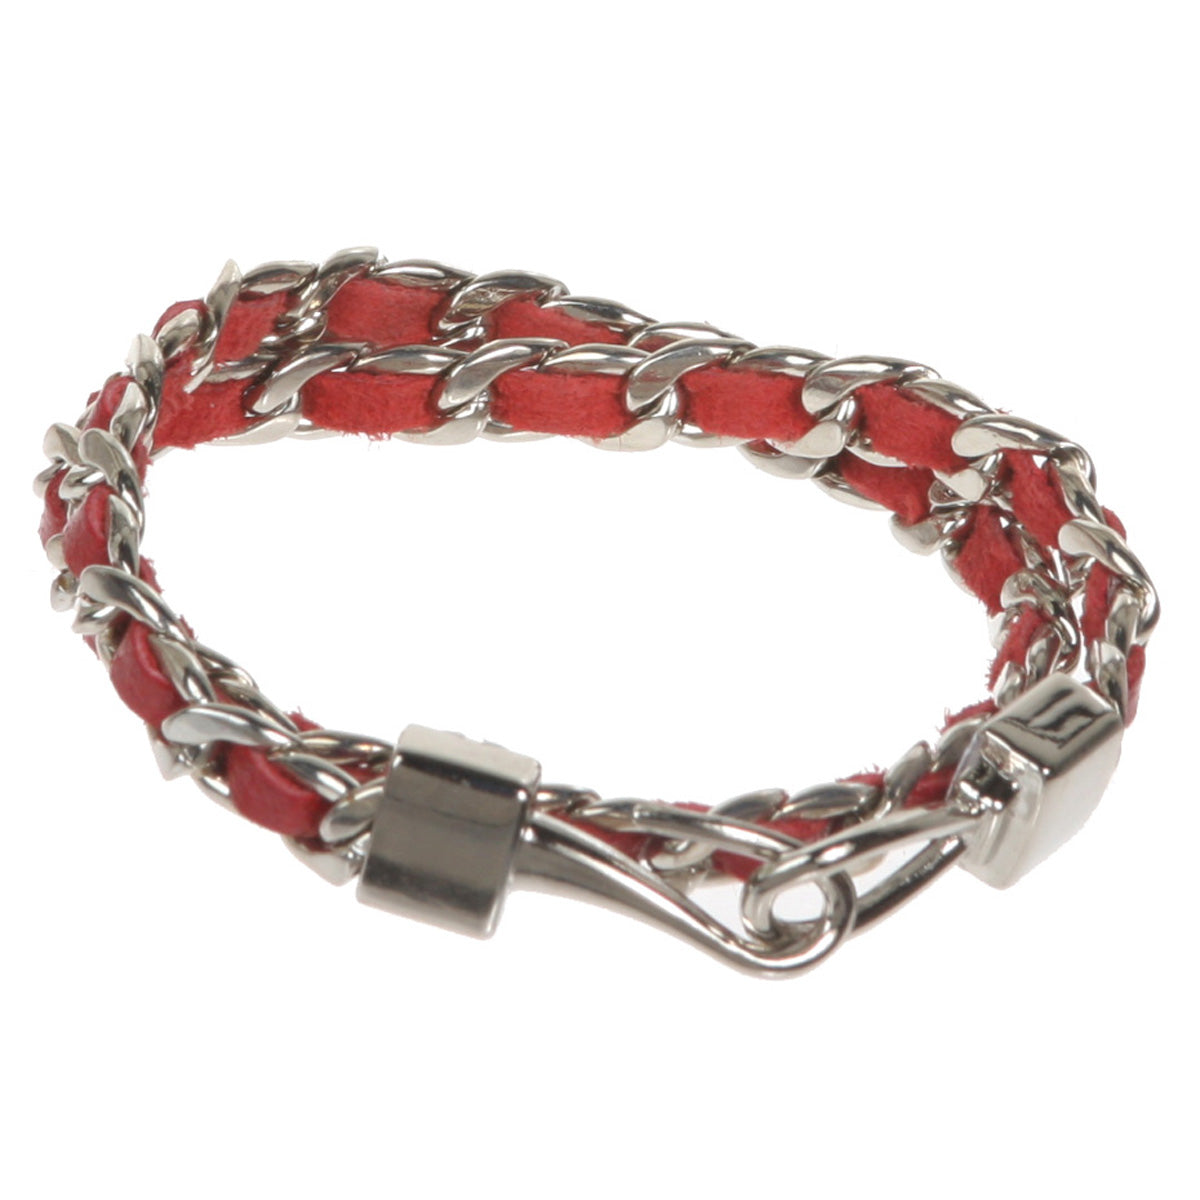 Double Wrap Leather Laced Chain Bracelet